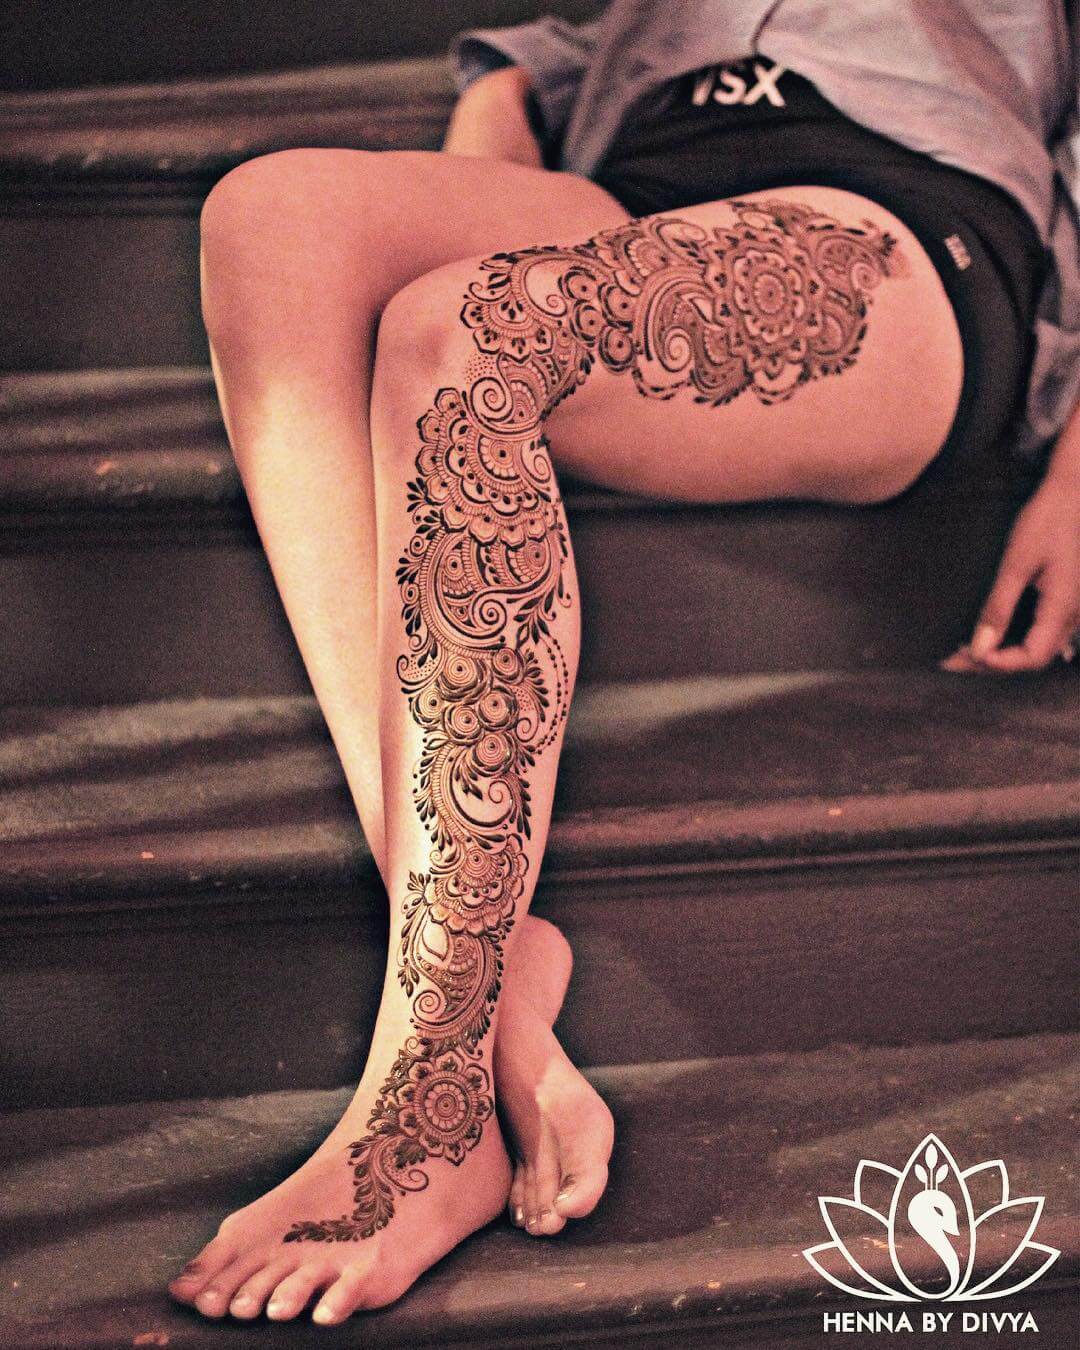 Thigh Tattoos  51 Very Impressive Thigh Tattoos Designs  Ideas